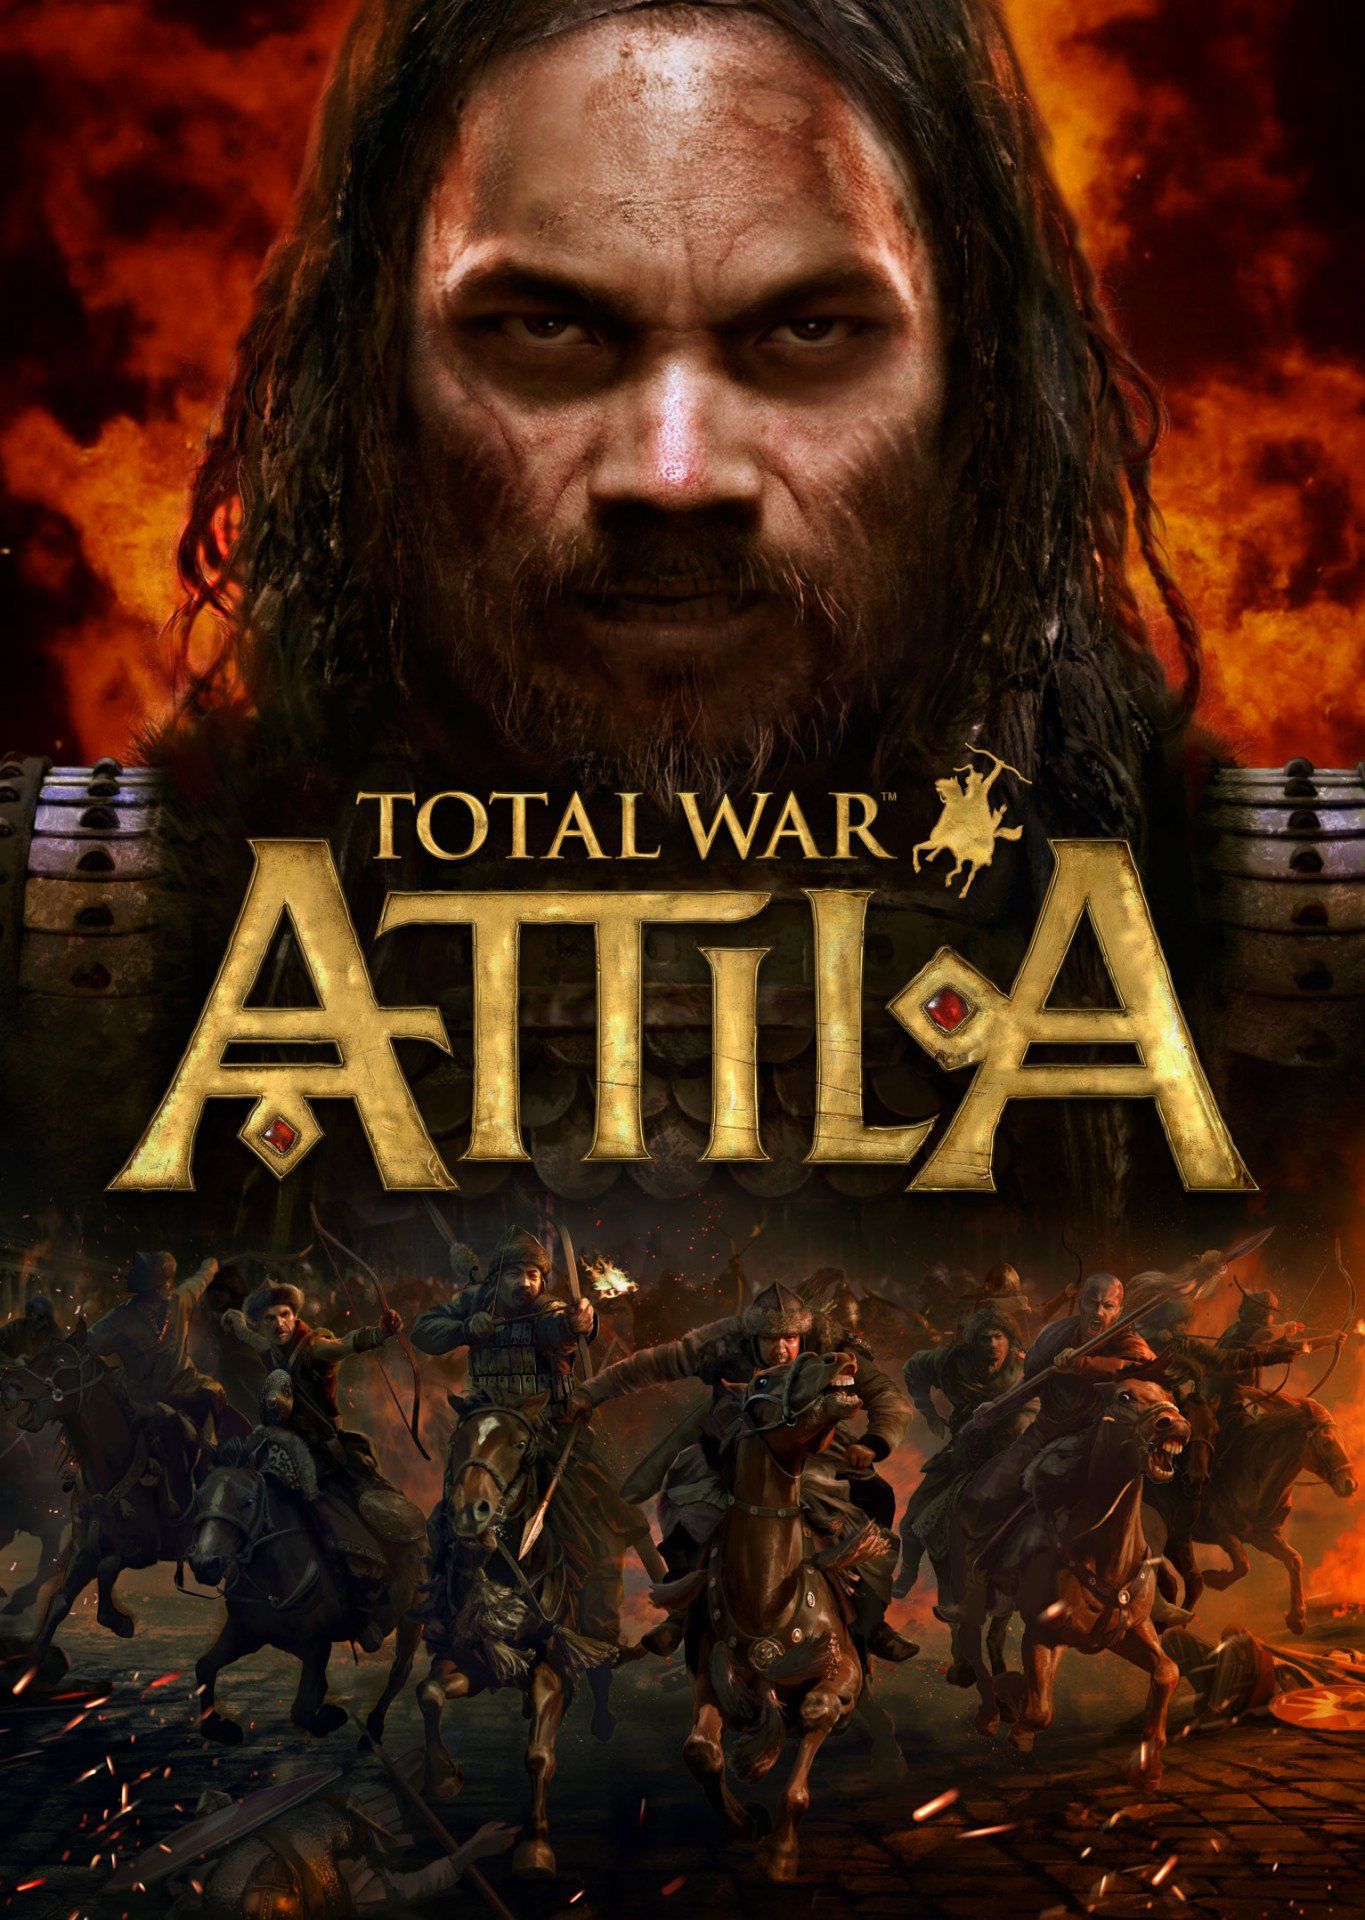 Total War: Attila von Sega